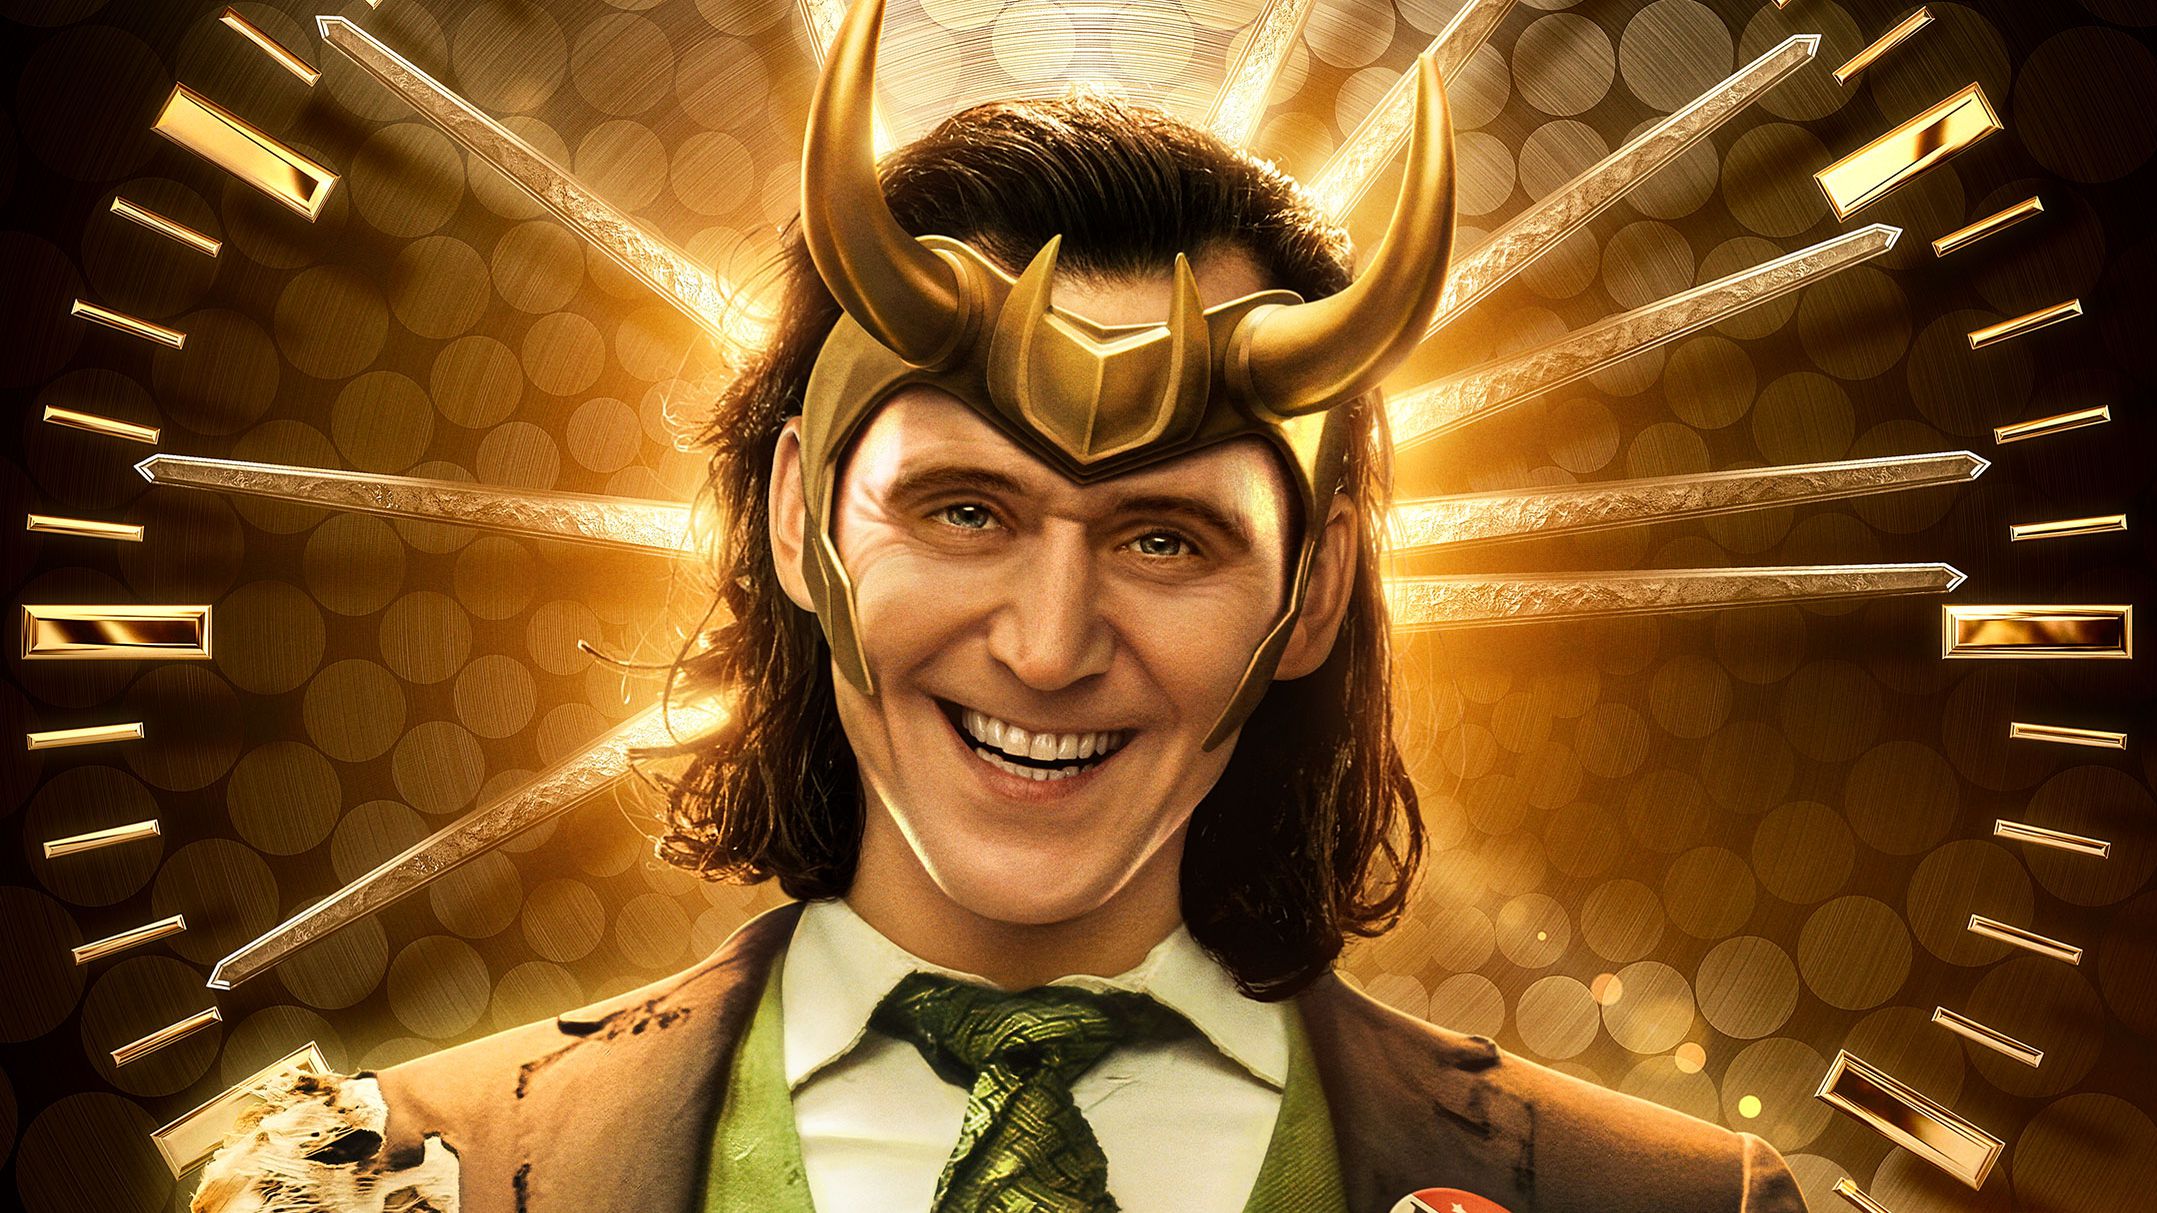 Quando vai estrear a temporada 2 de Loki? - Canaltech